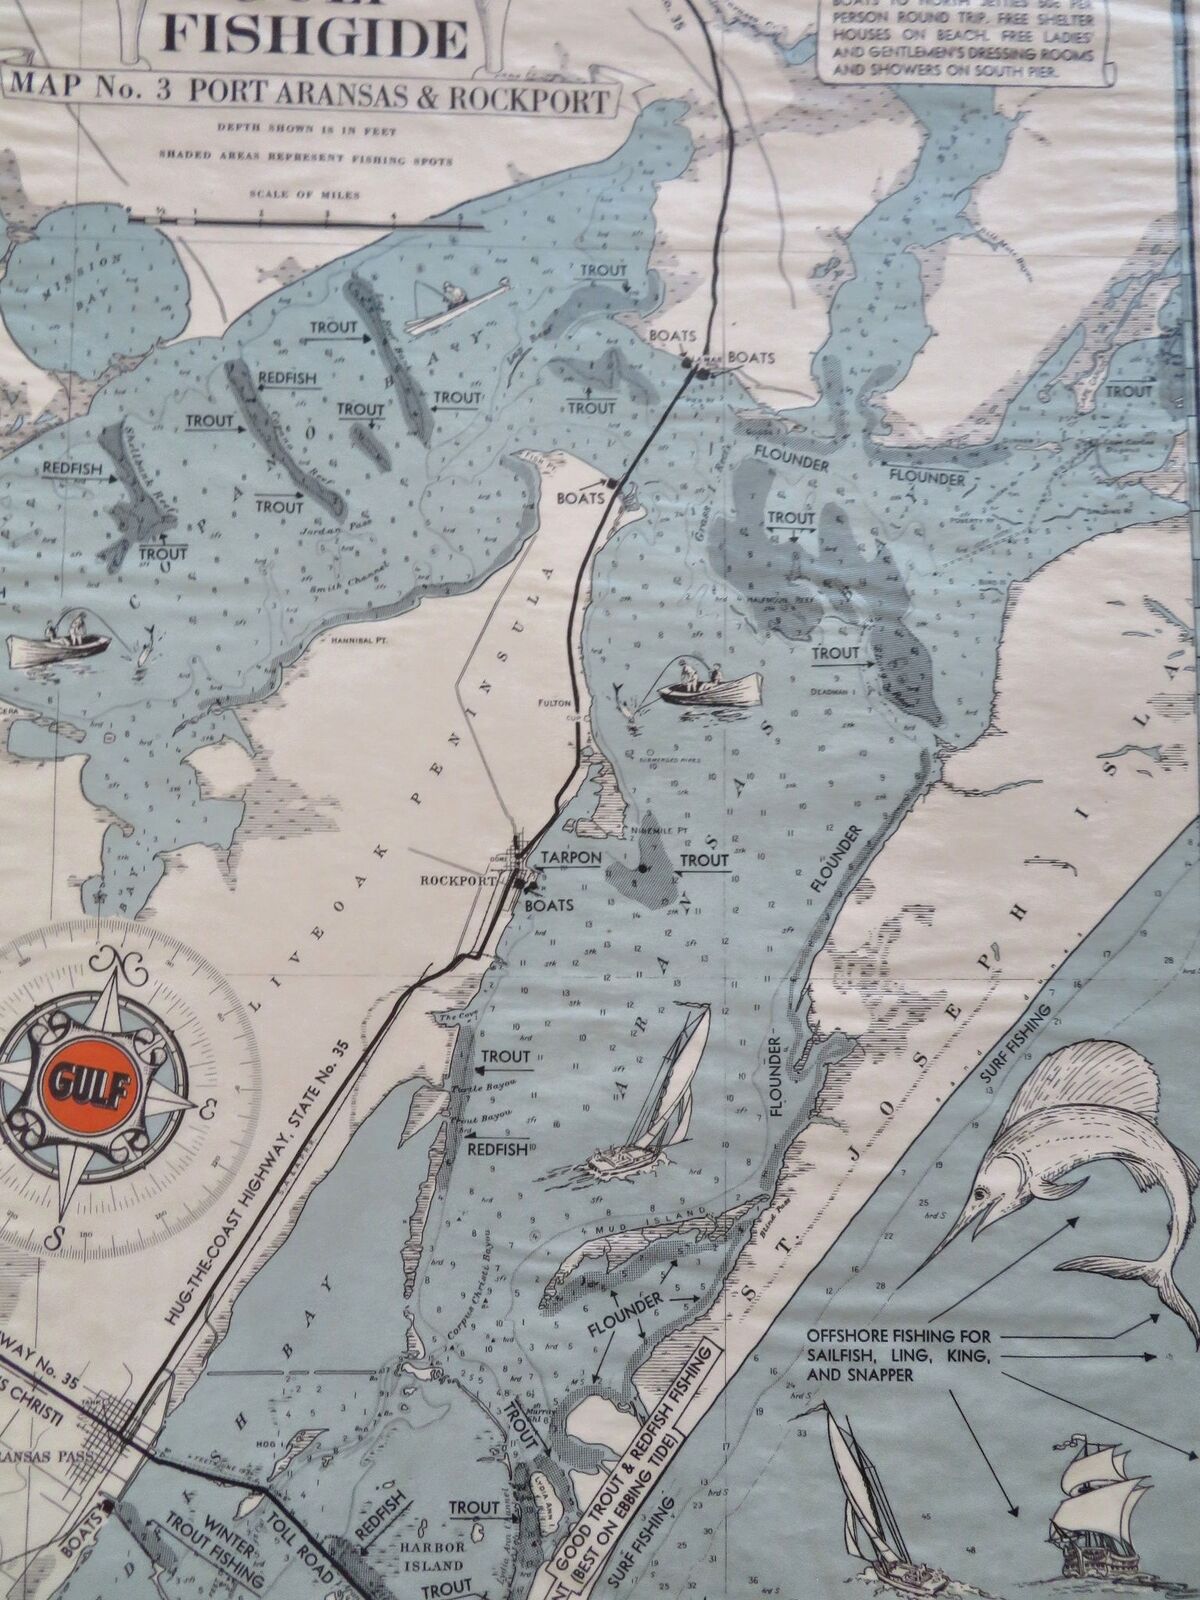 Port Aransas & Rockport Texas Gulf of Mexico 1940's U.S. cartoon fishing map